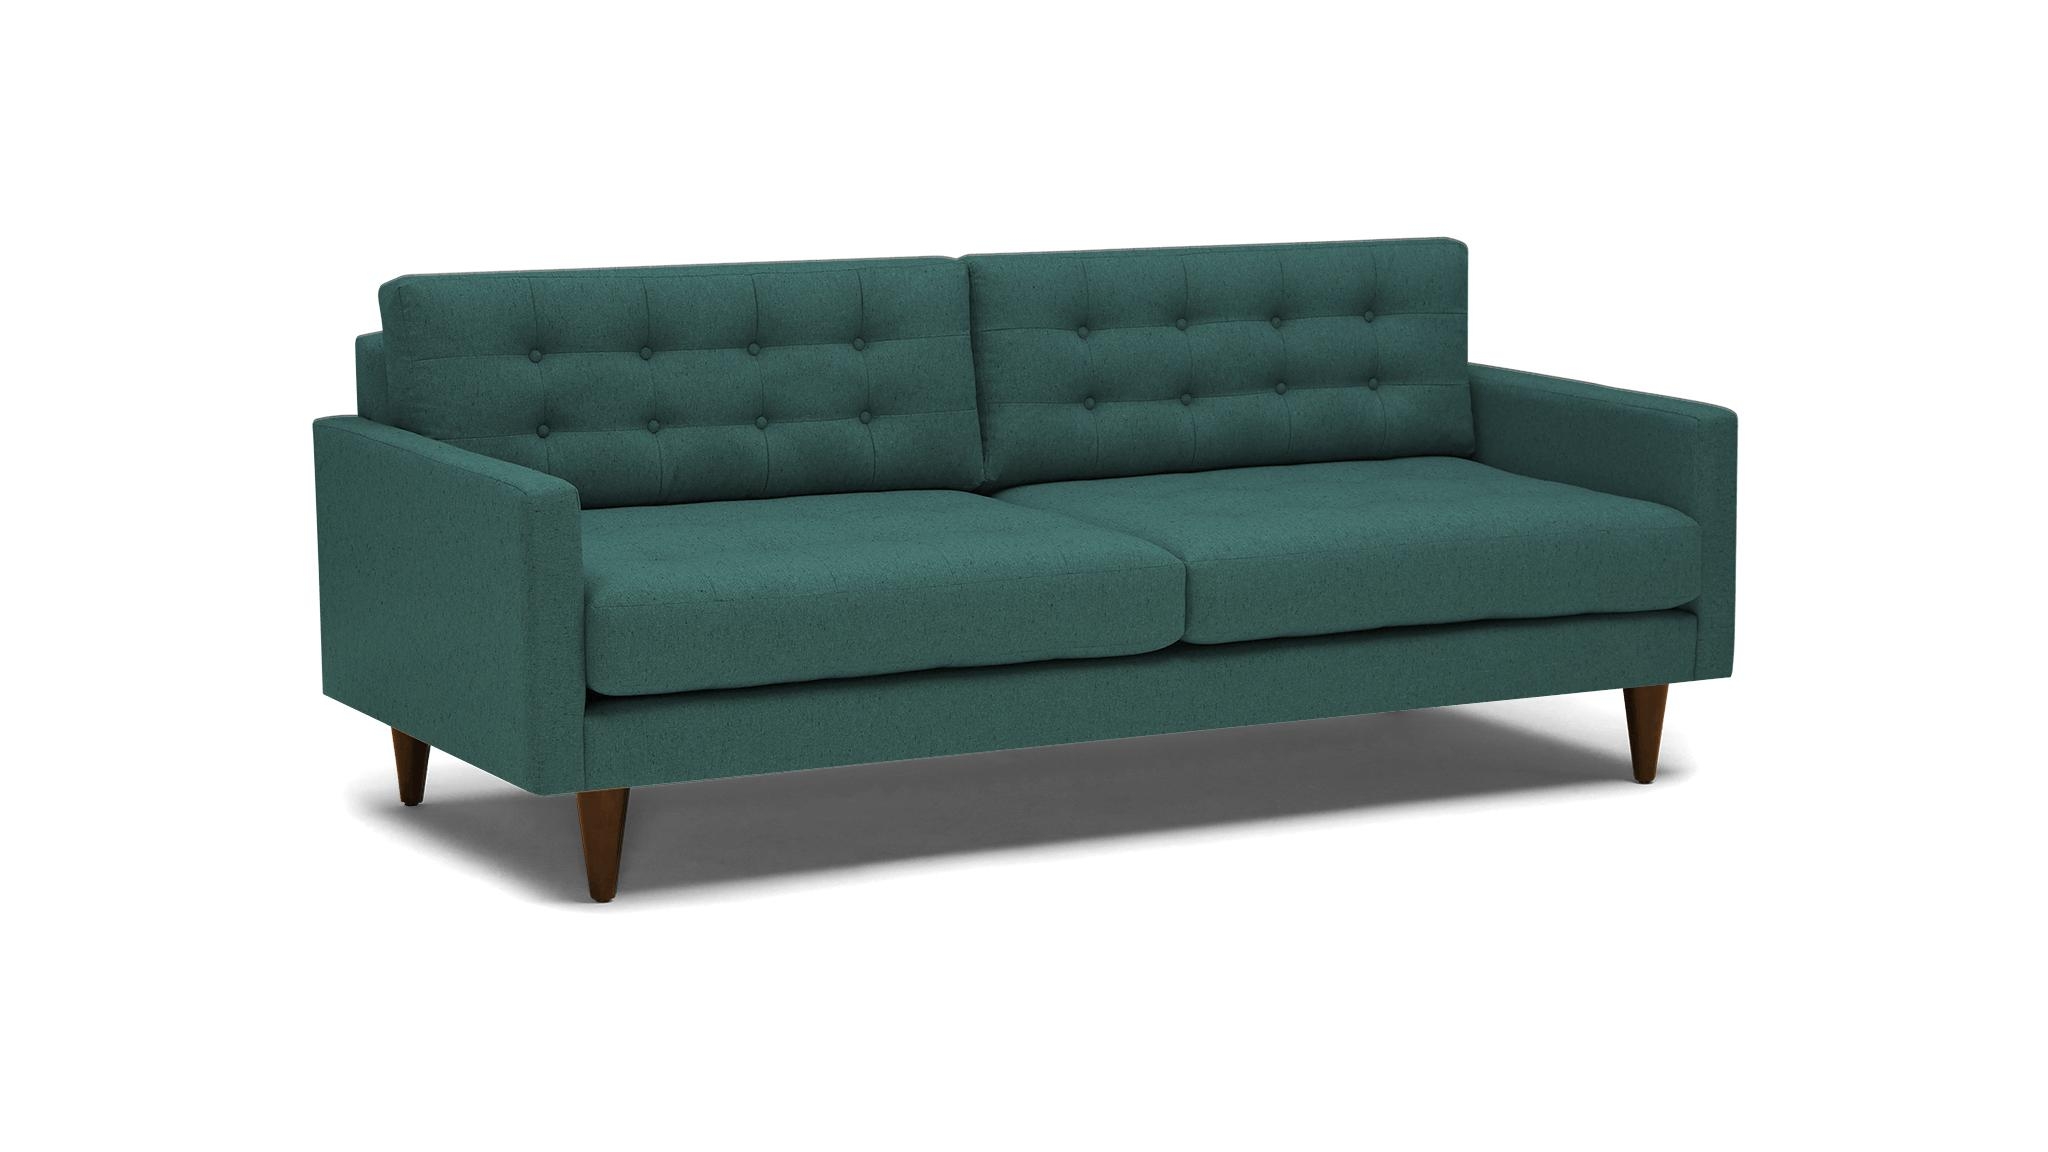 Blue Eliot Mid Century Modern Sofa - Prime Peacock - Mocha - Image 1